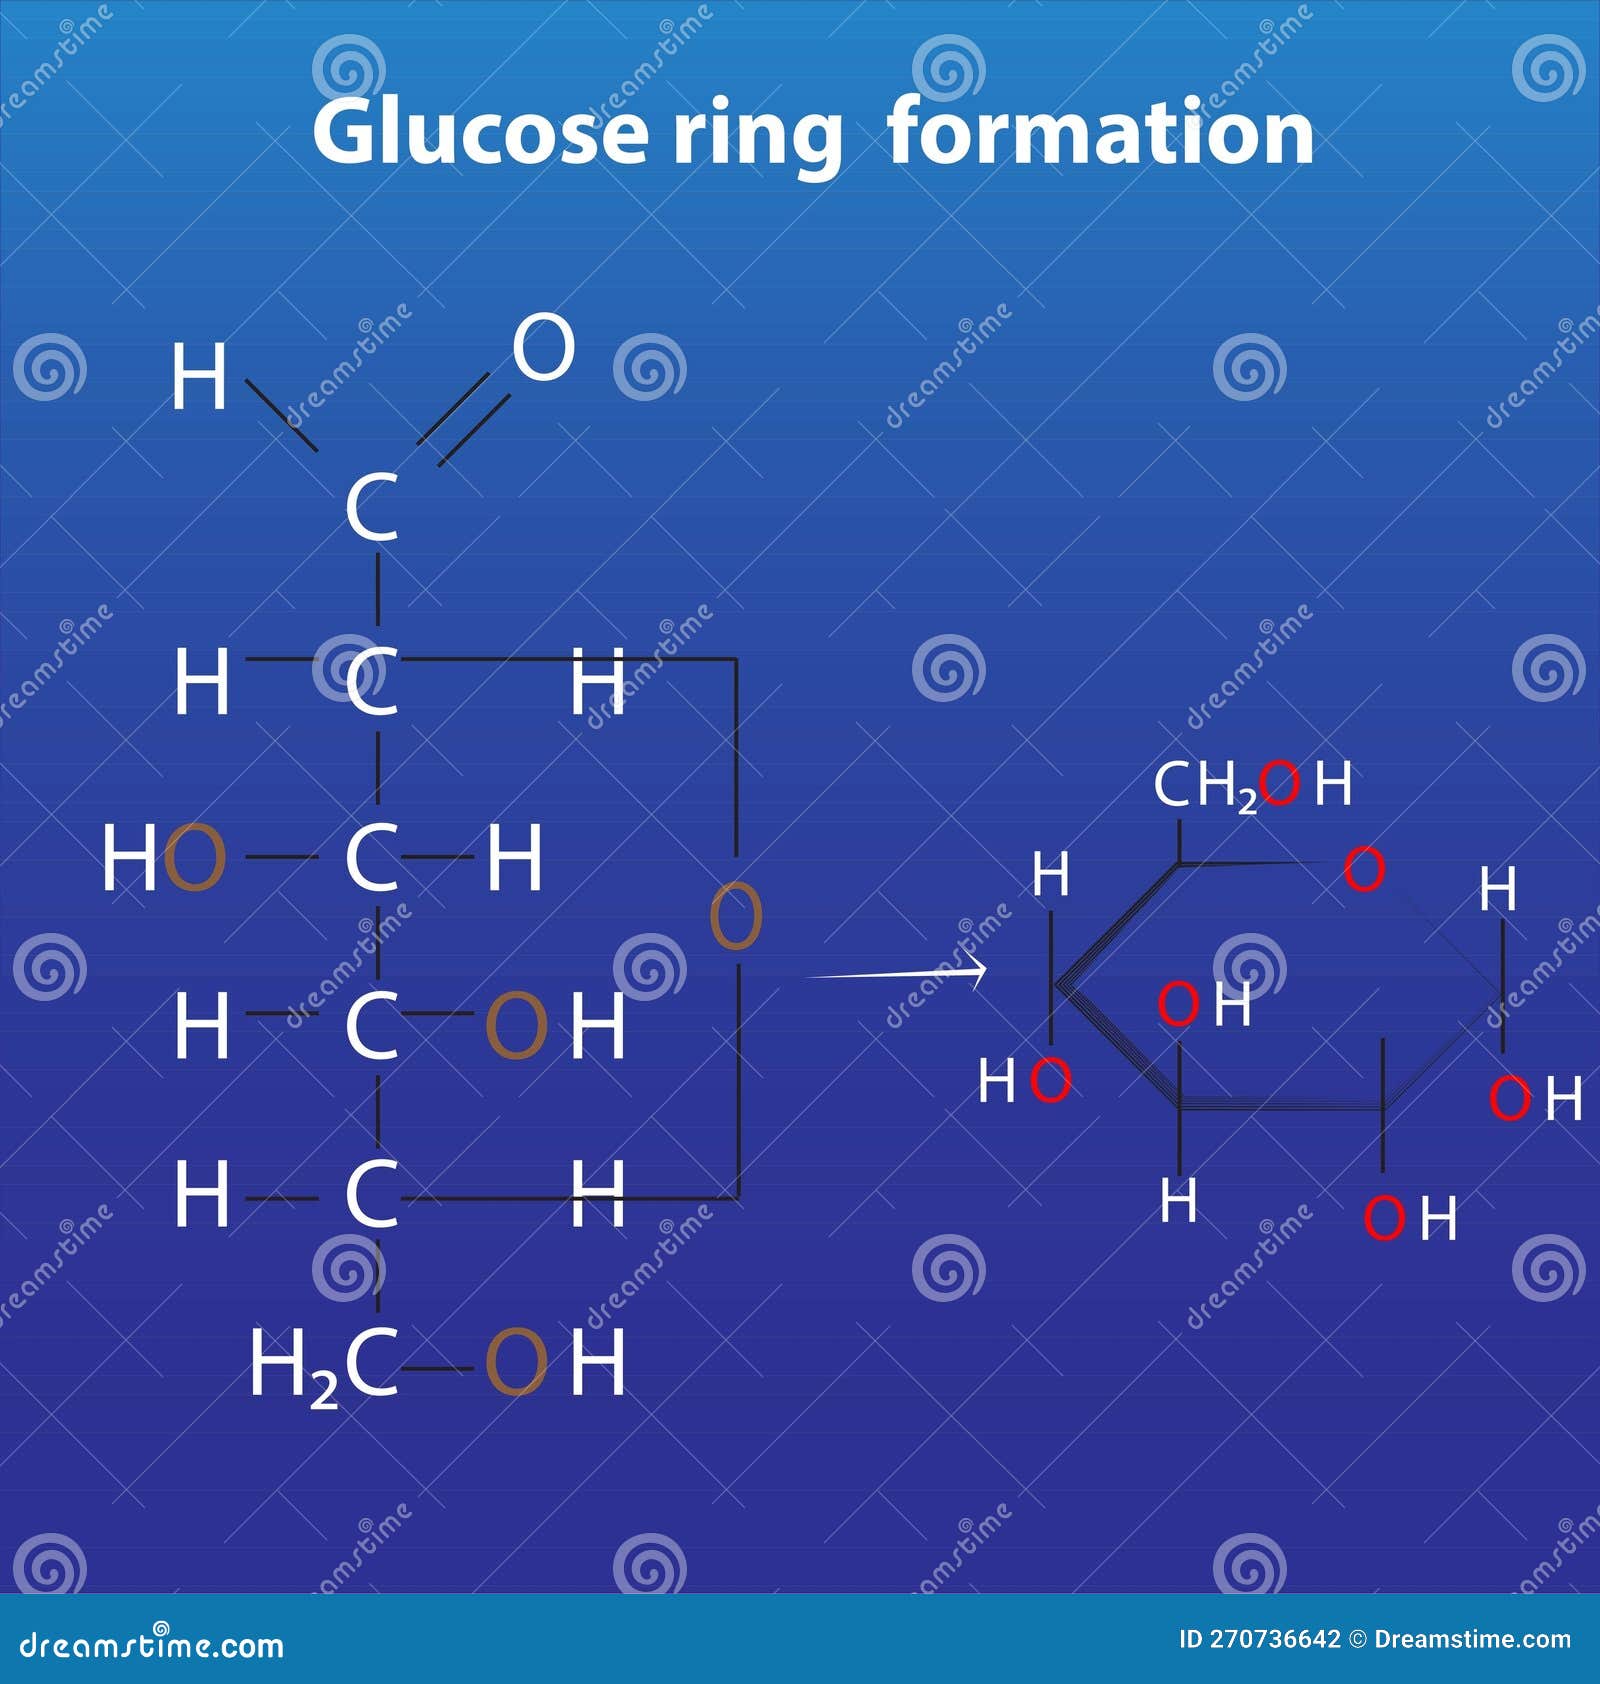 Telugu] Write a brief note on the structure of glucose.